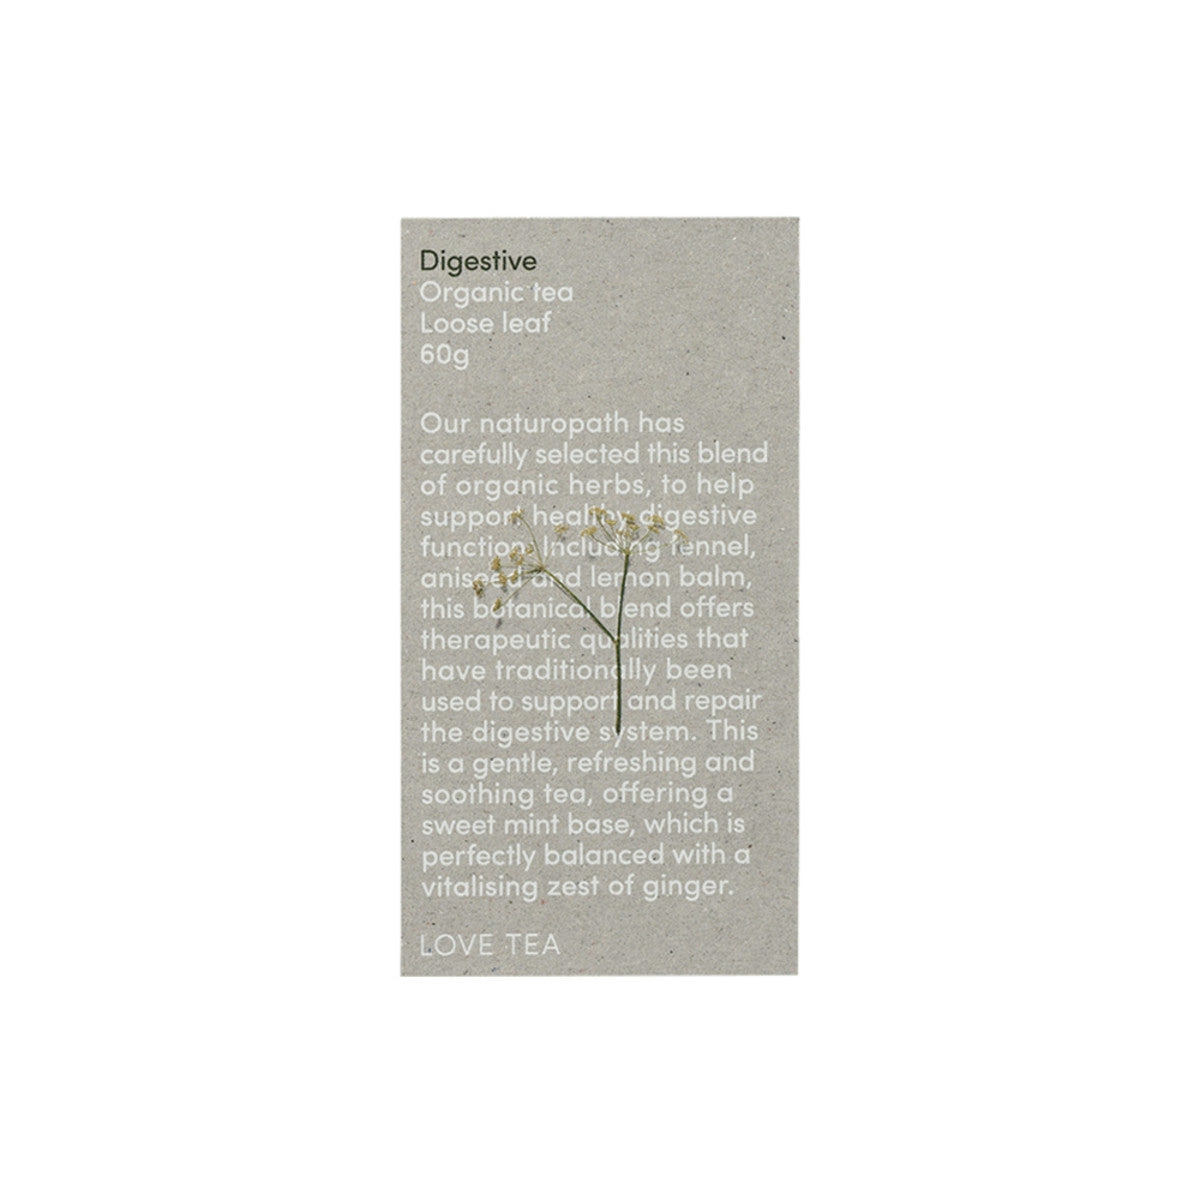 image of Love Tea Organic Digestive Tea Loose Leaf 60g on white background